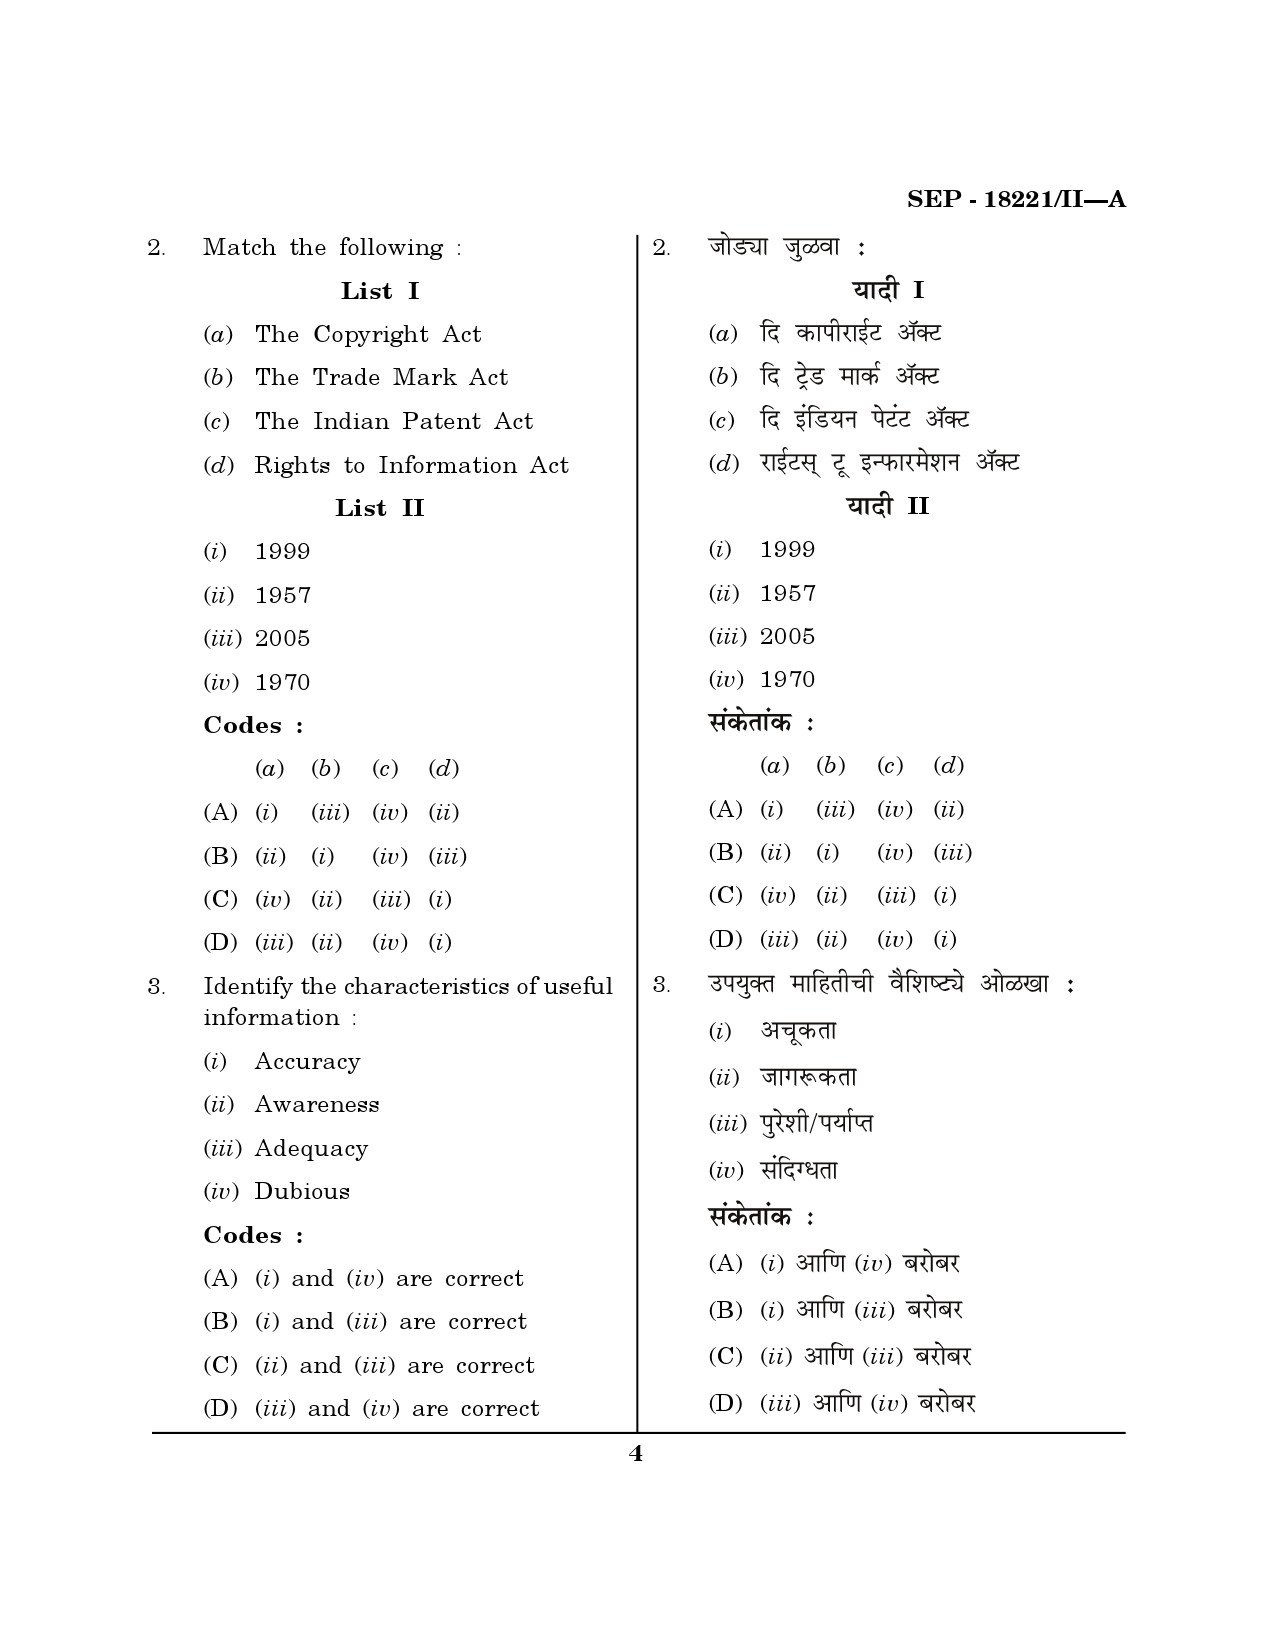 Maharashtra SET Library Information Science Exam Question Paper September 2021 3